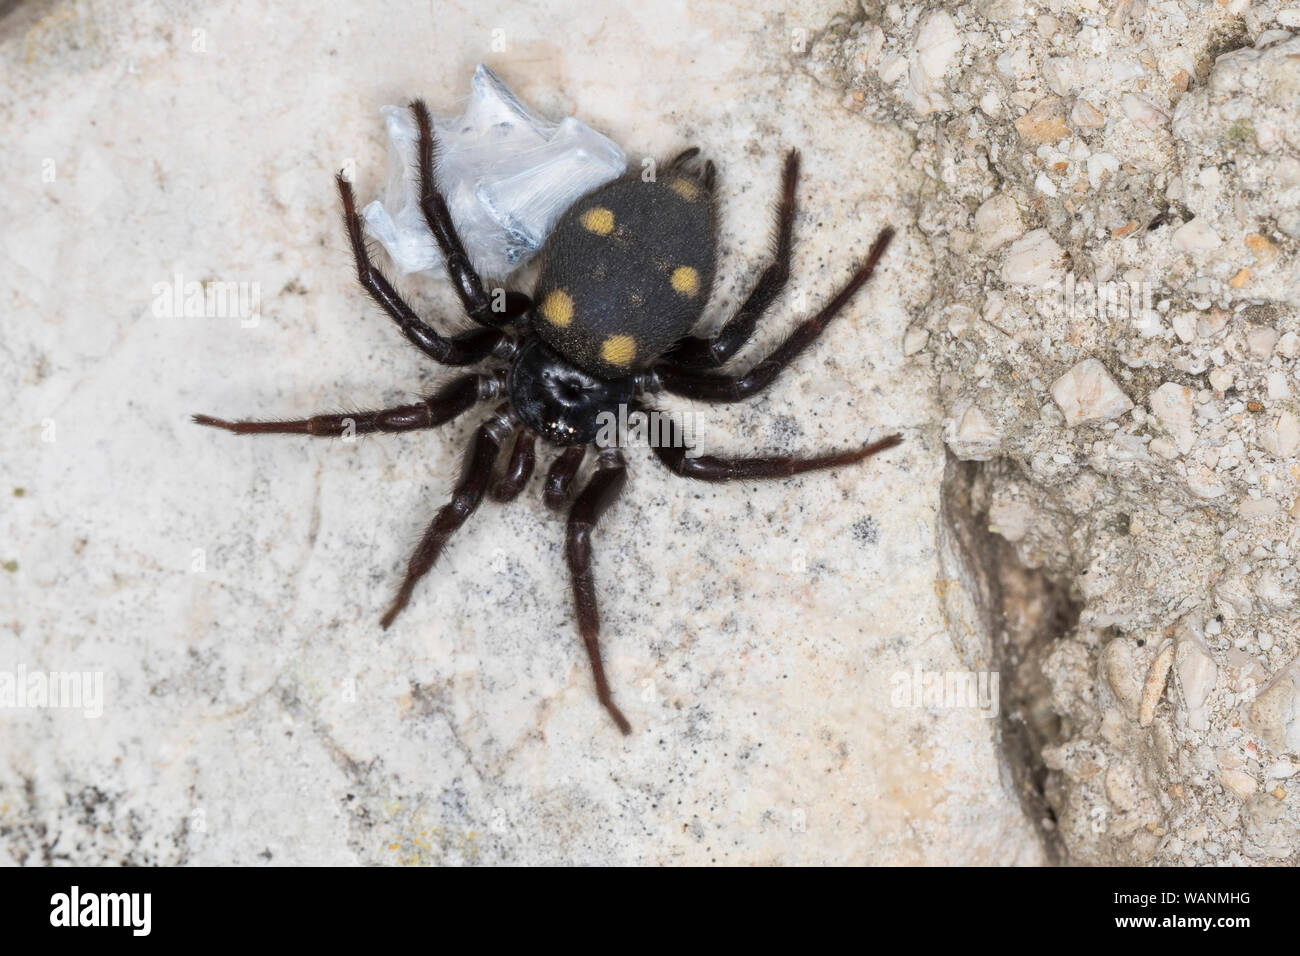 Zeltdachspinne, Zeltdach-Spinne, mit Beute, Uroctea durandi, Oecobiidae, Scheibennetzspinnen, Kroatien, Croatia Stock Photo